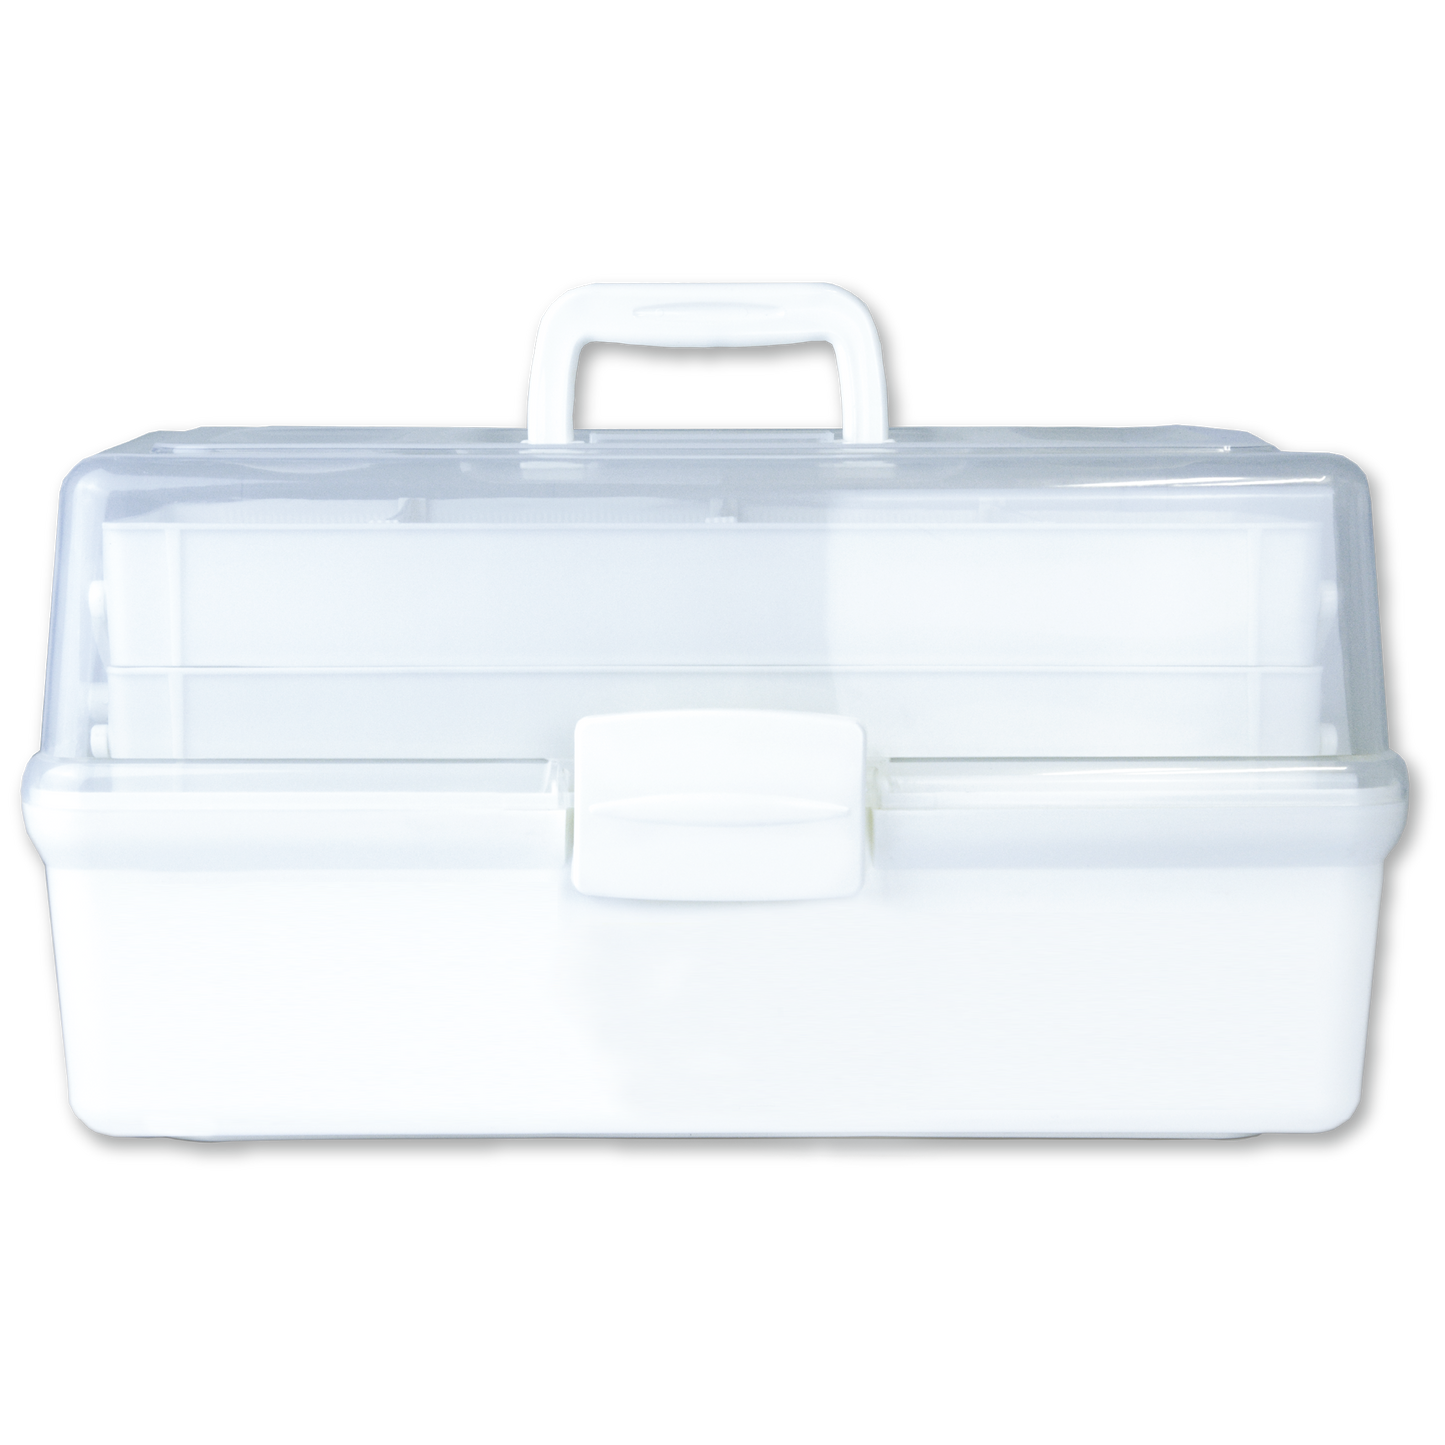 AEROCASE Medium White and Clear Tacklebox 42 x 21 x 22cm